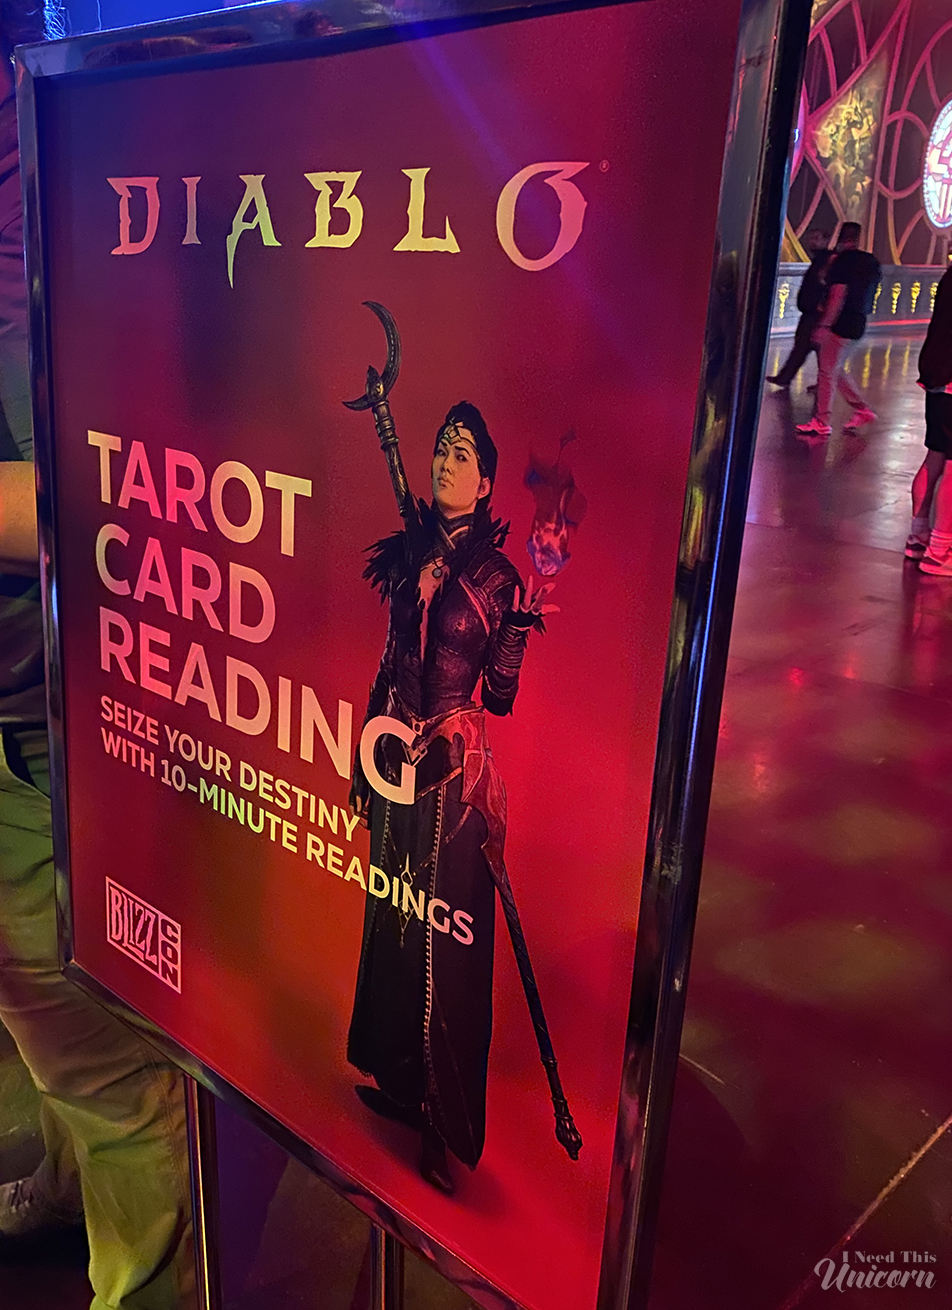 Diablo Tarpt Card Reading